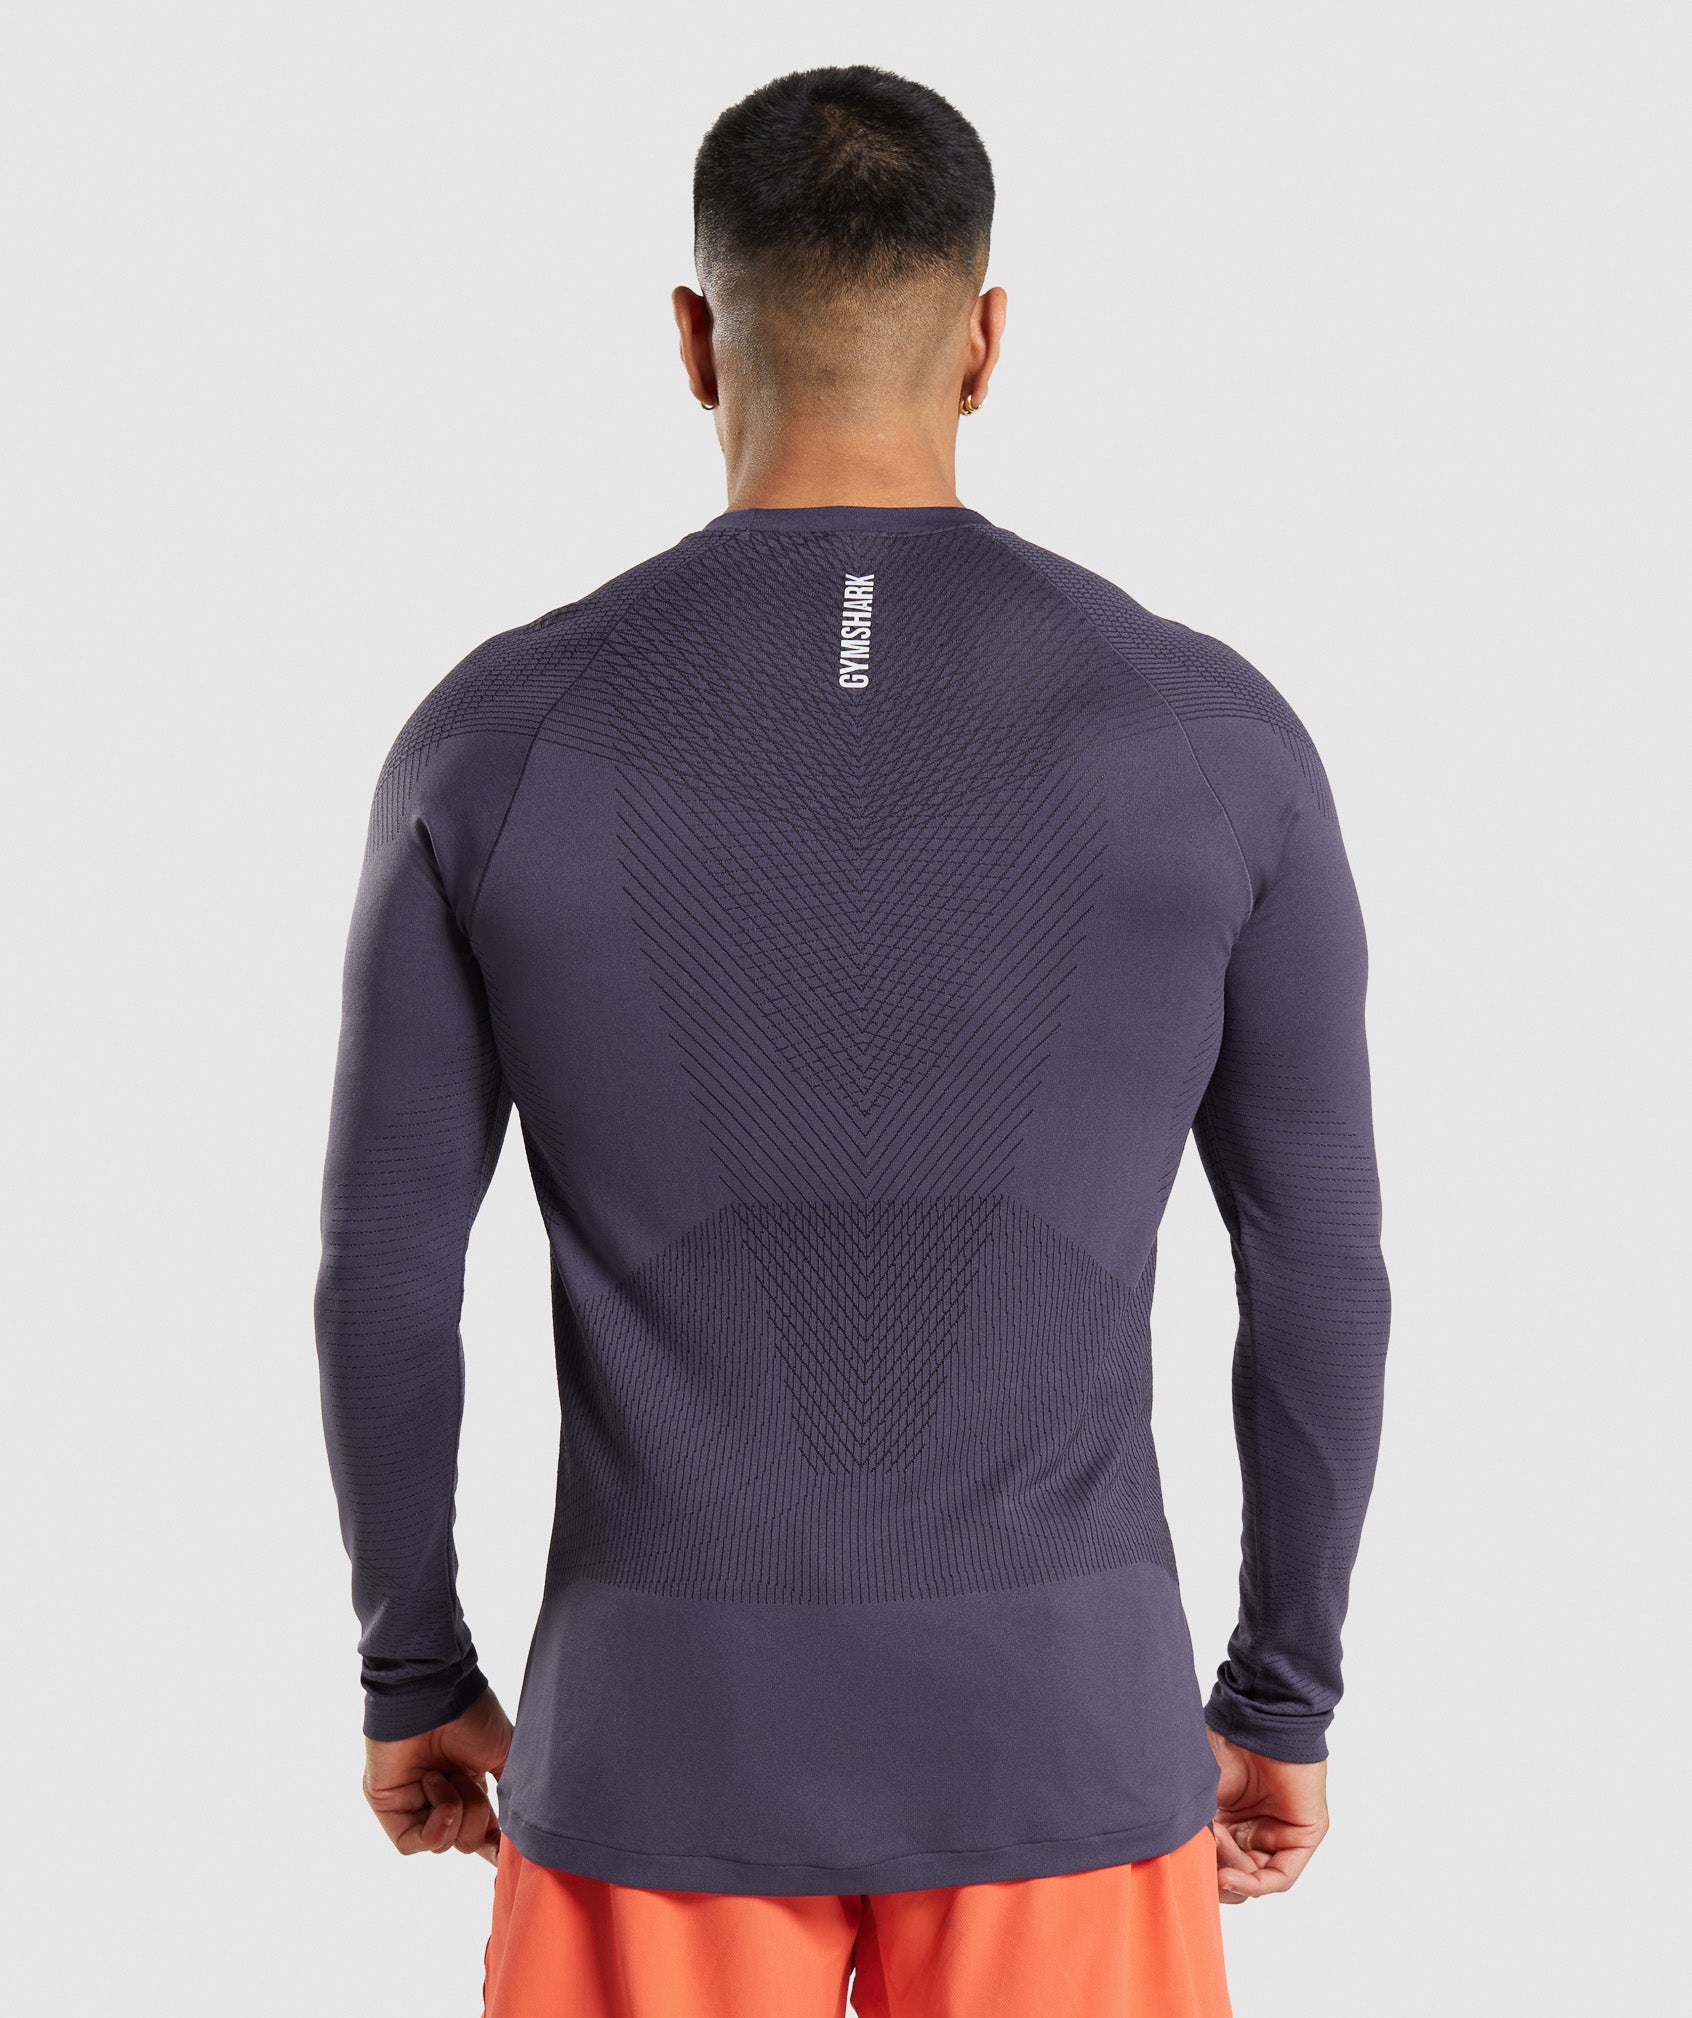 Apex Seamless Long Sleeve T-Shirt in Rich Purple/Black